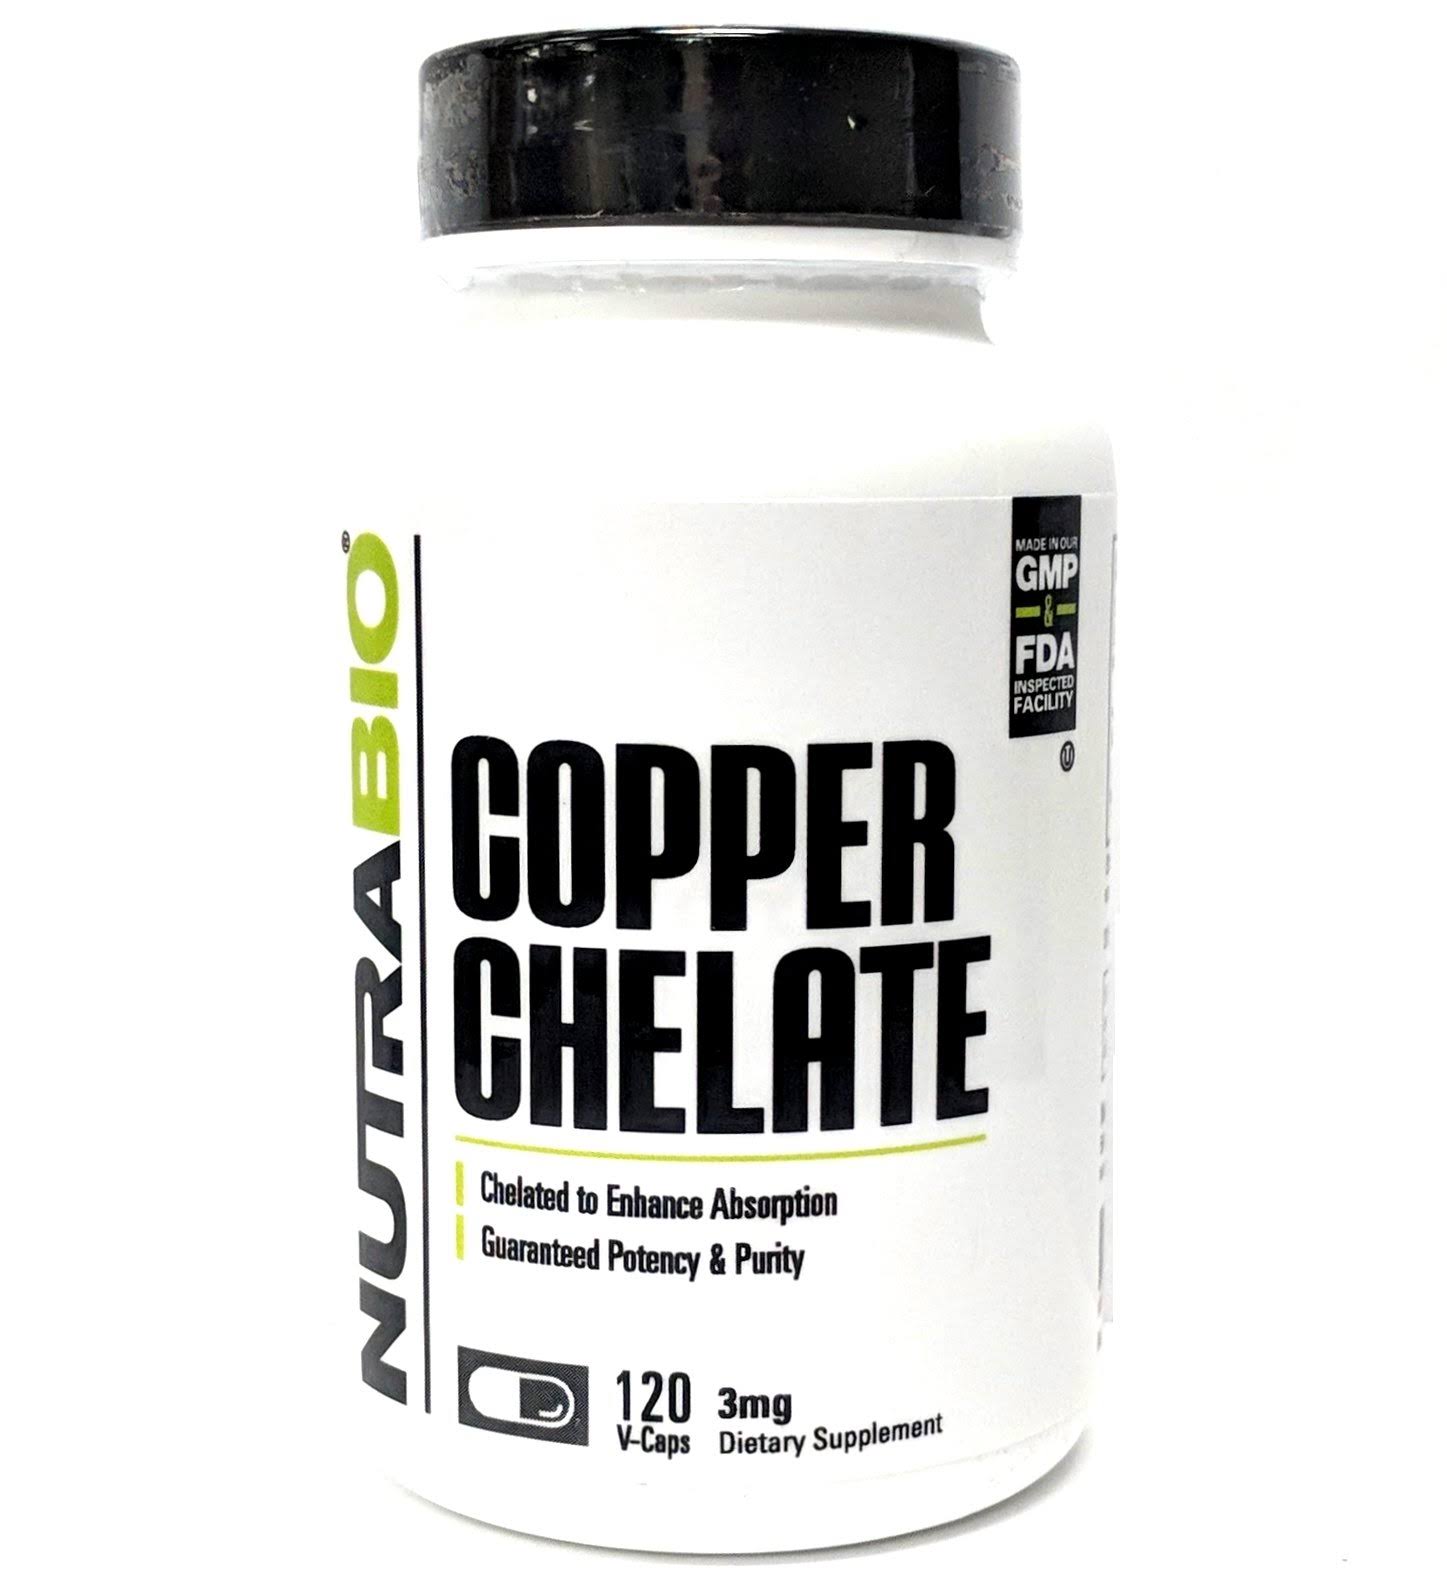 NutraBio Copper Chelate Supplement - 120 Vegetable Capsules